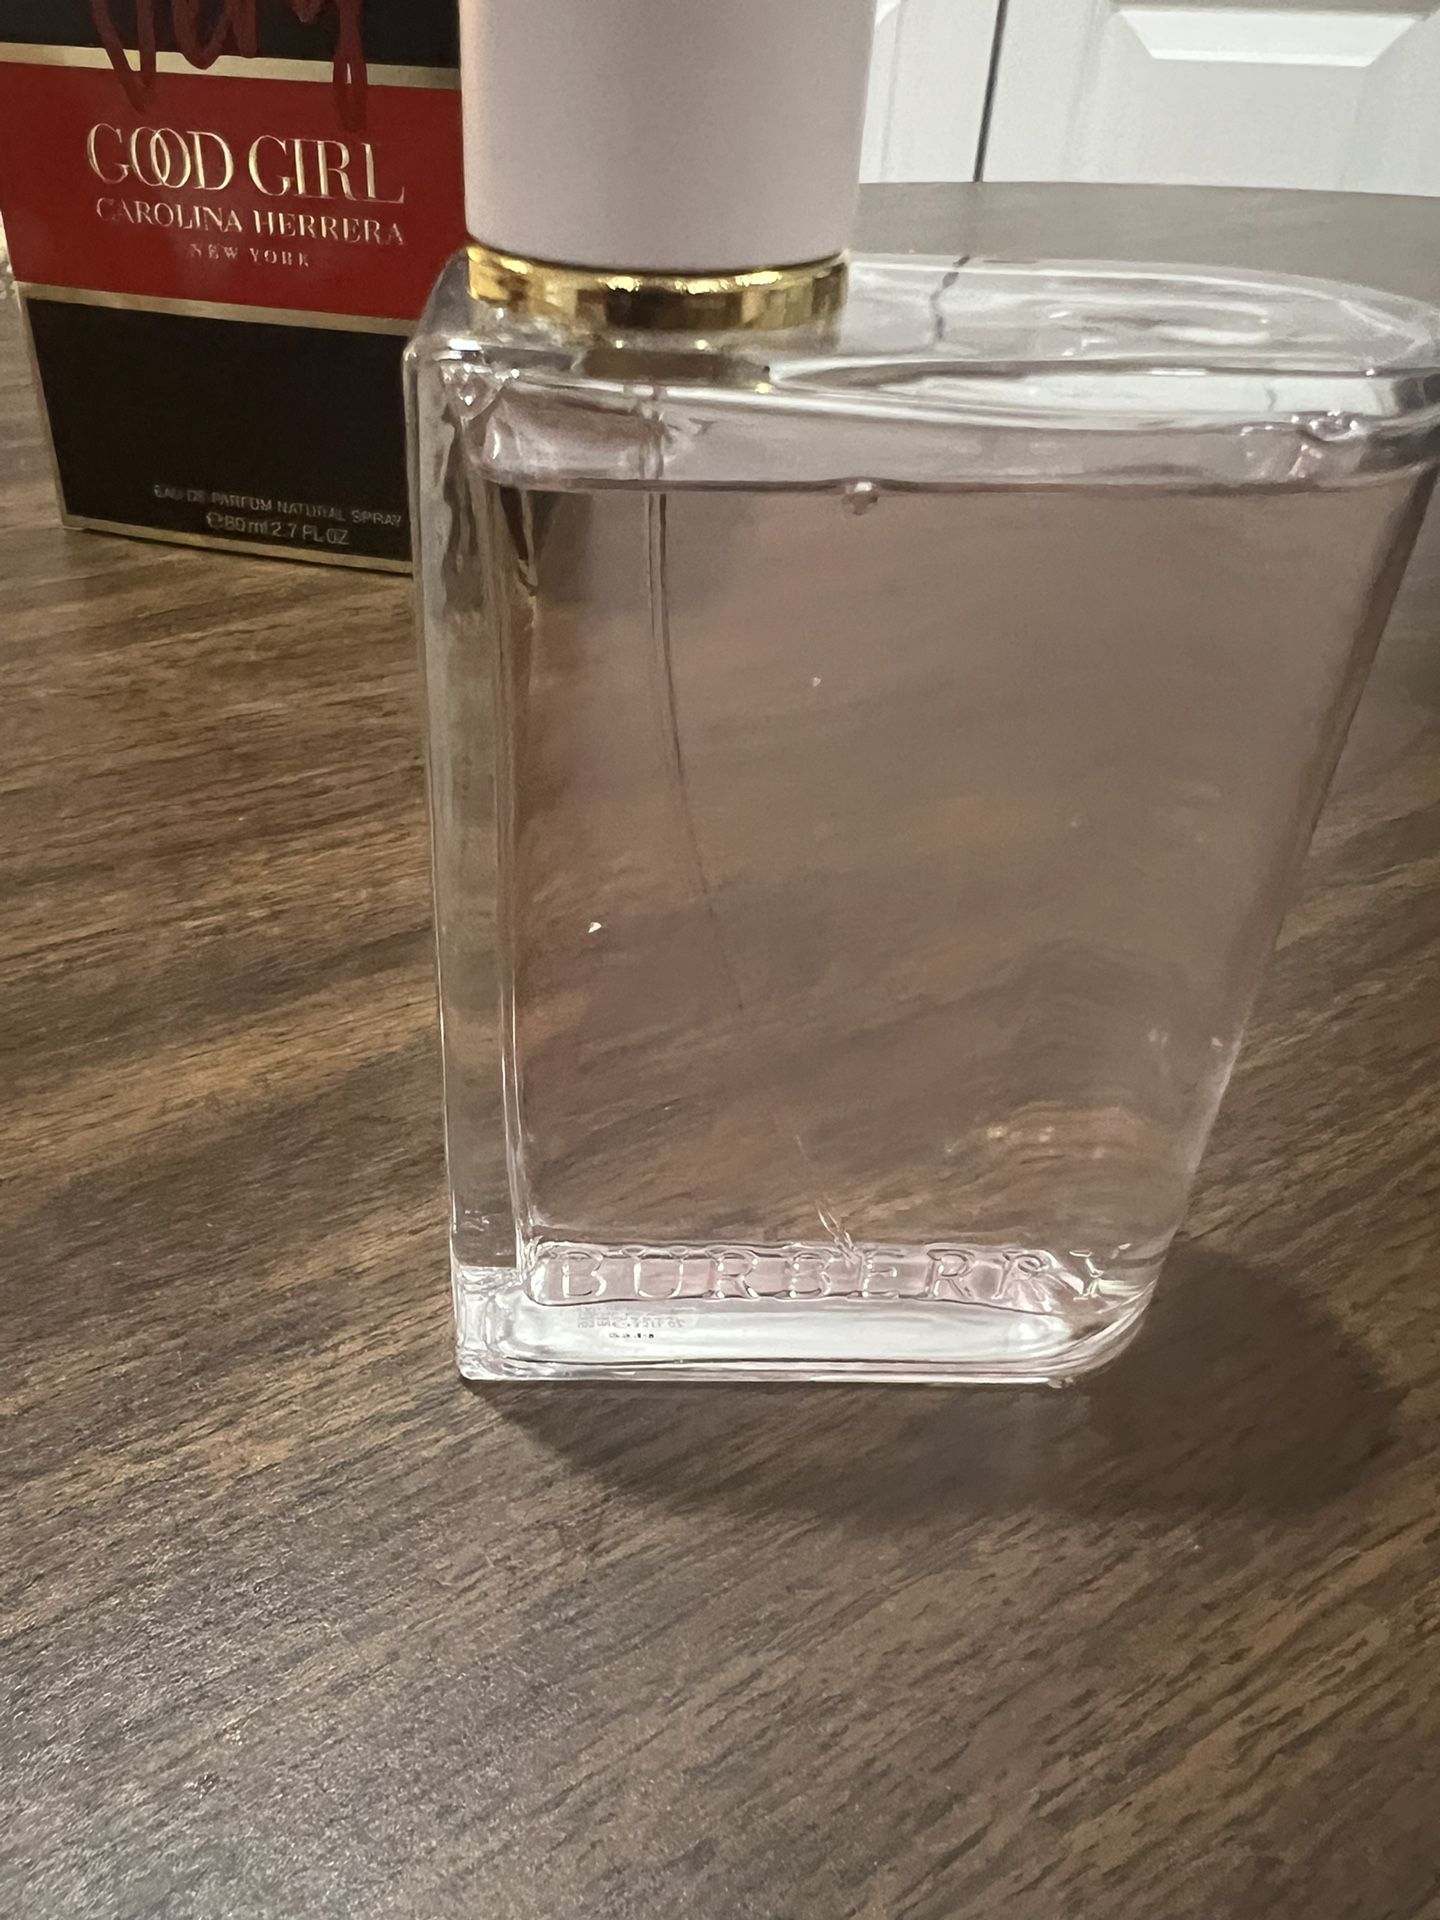 Trovogue perfume Cruiser Brown for MEN for Sale in Marietta, GA - OfferUp